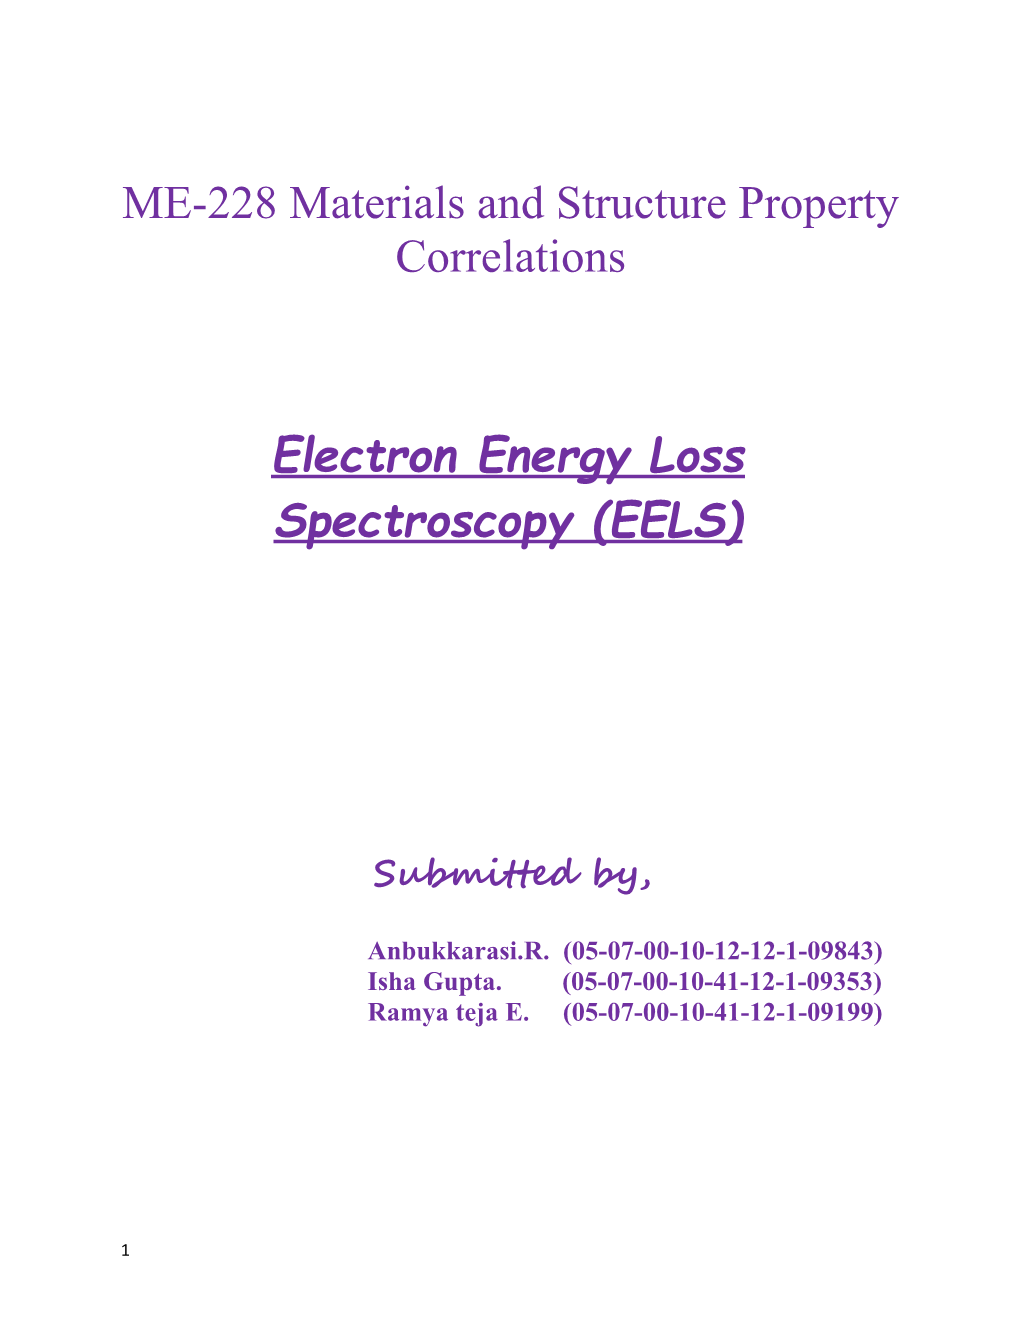 Electron Energy Loss Spectroscopy(EELS)